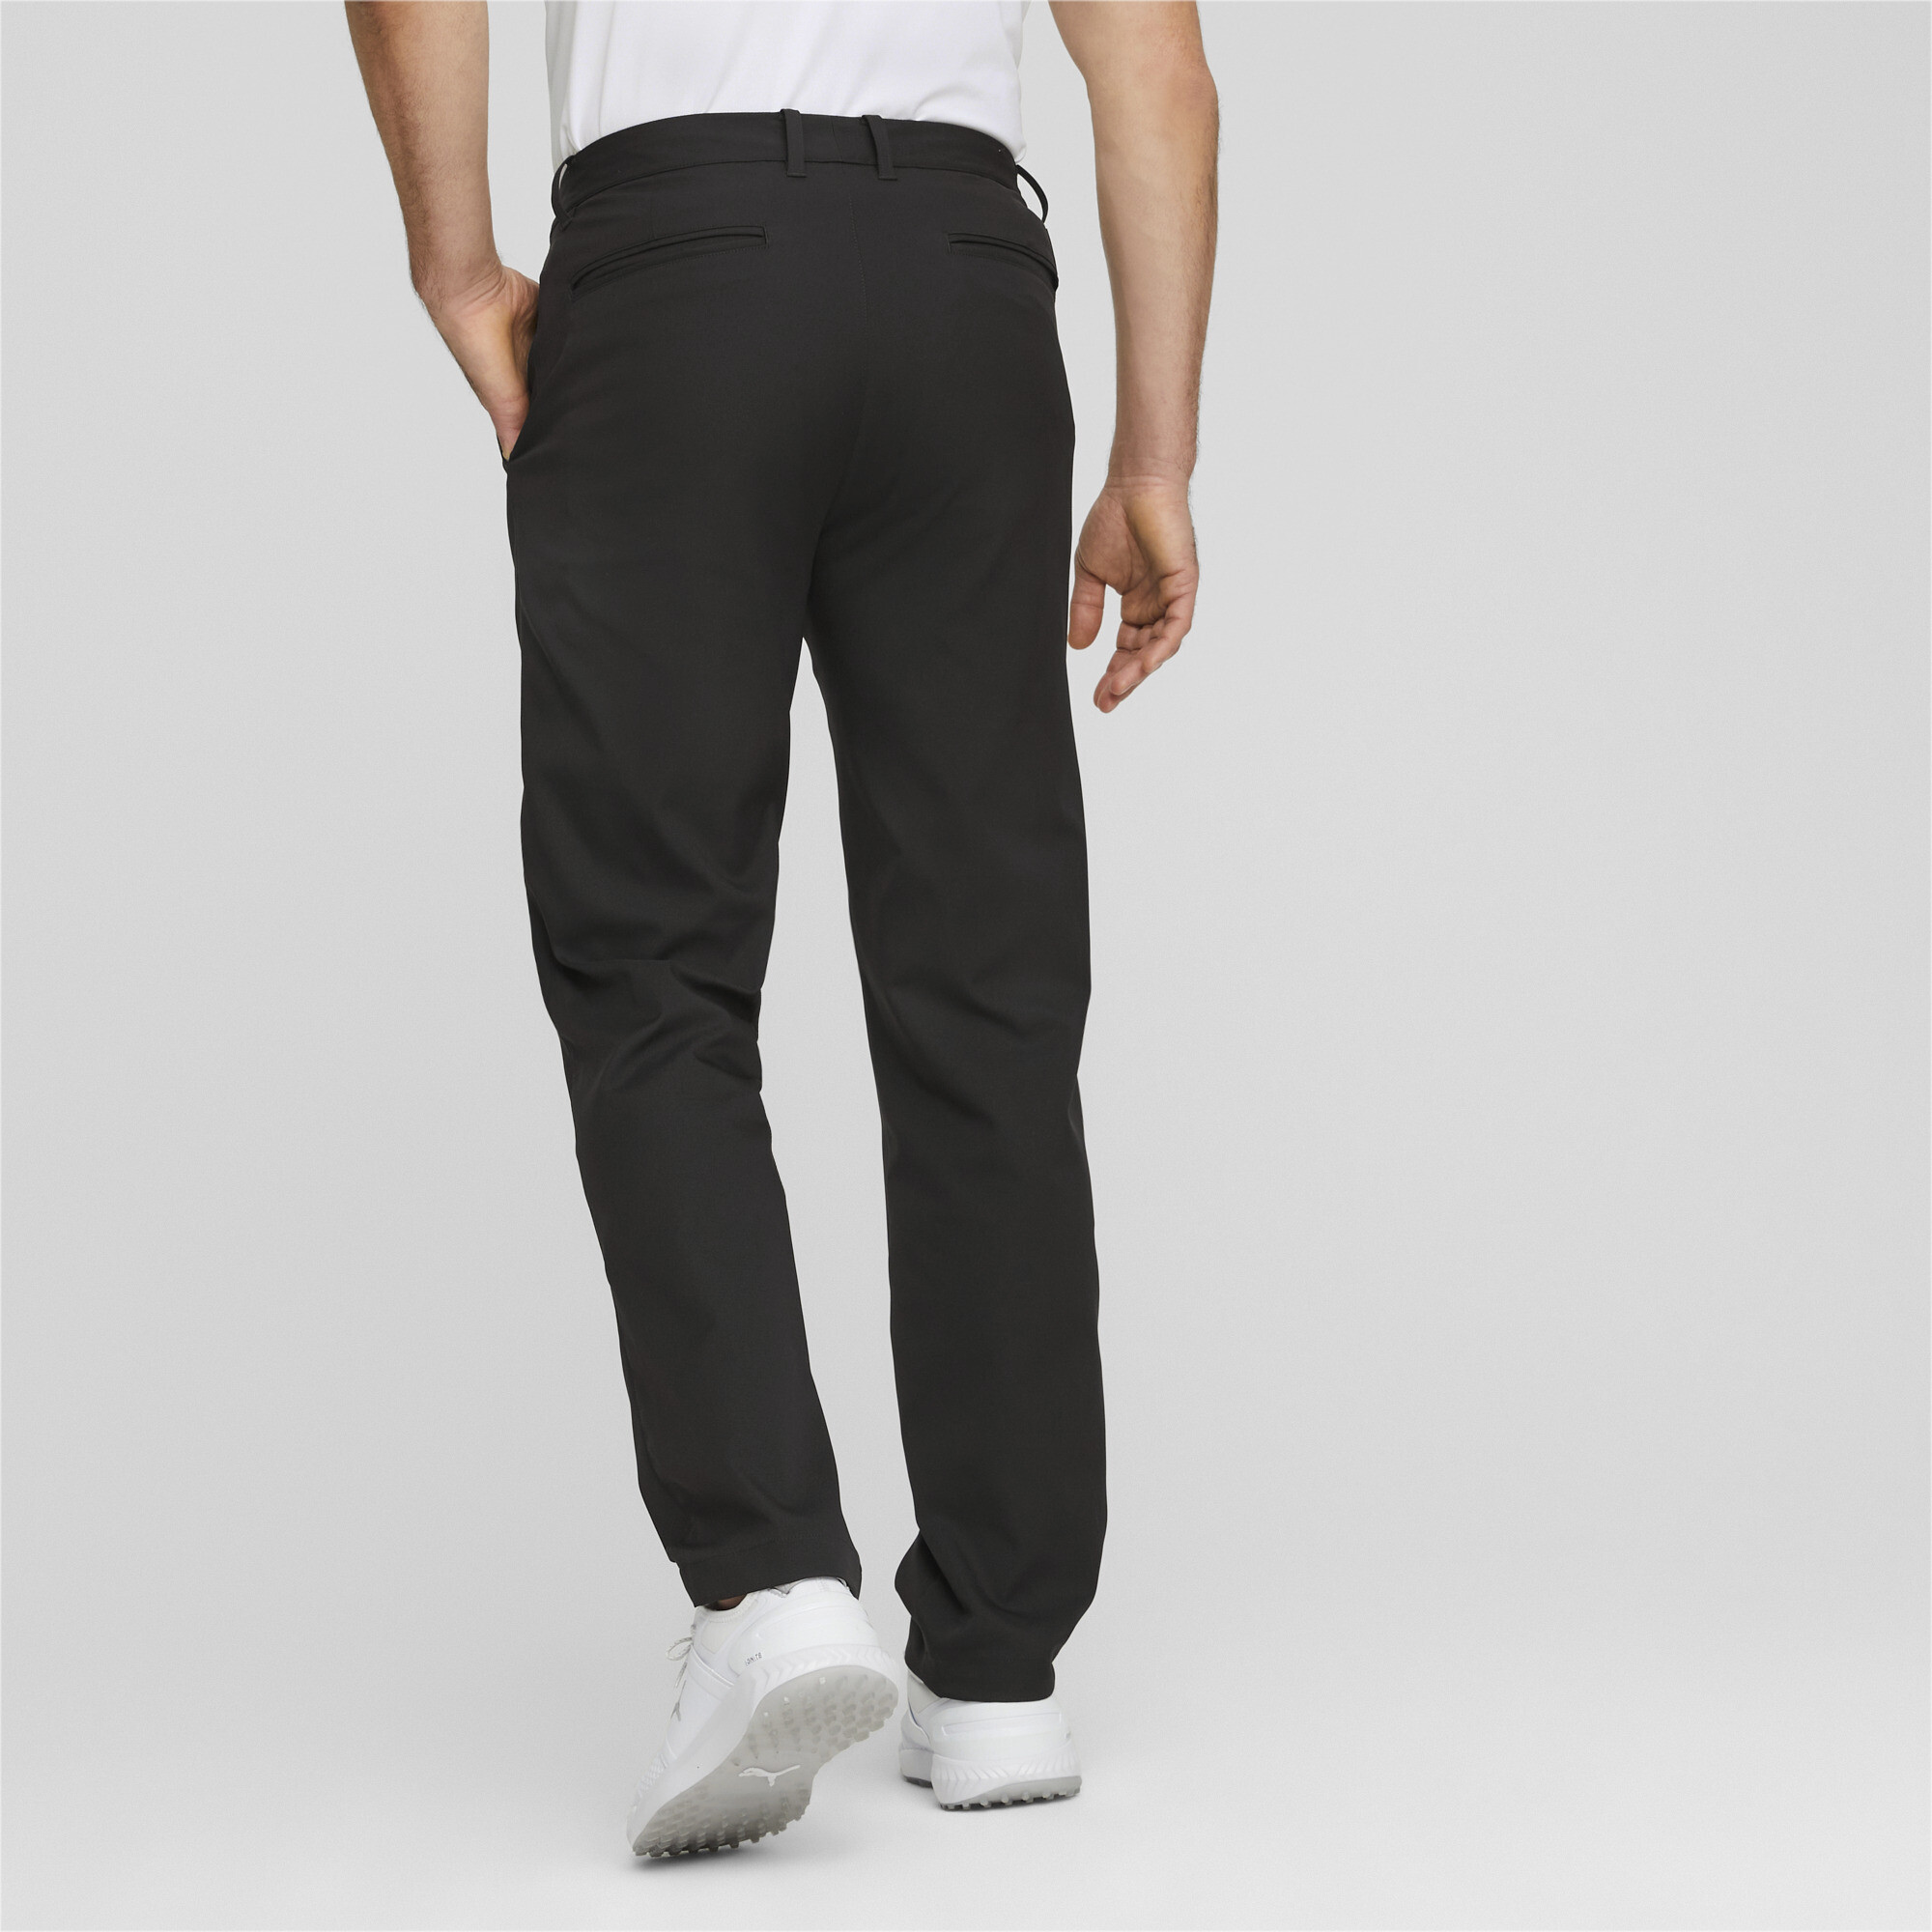 Men's Puma Dealer Golf Pants, Black, Size 31/32, Clothing